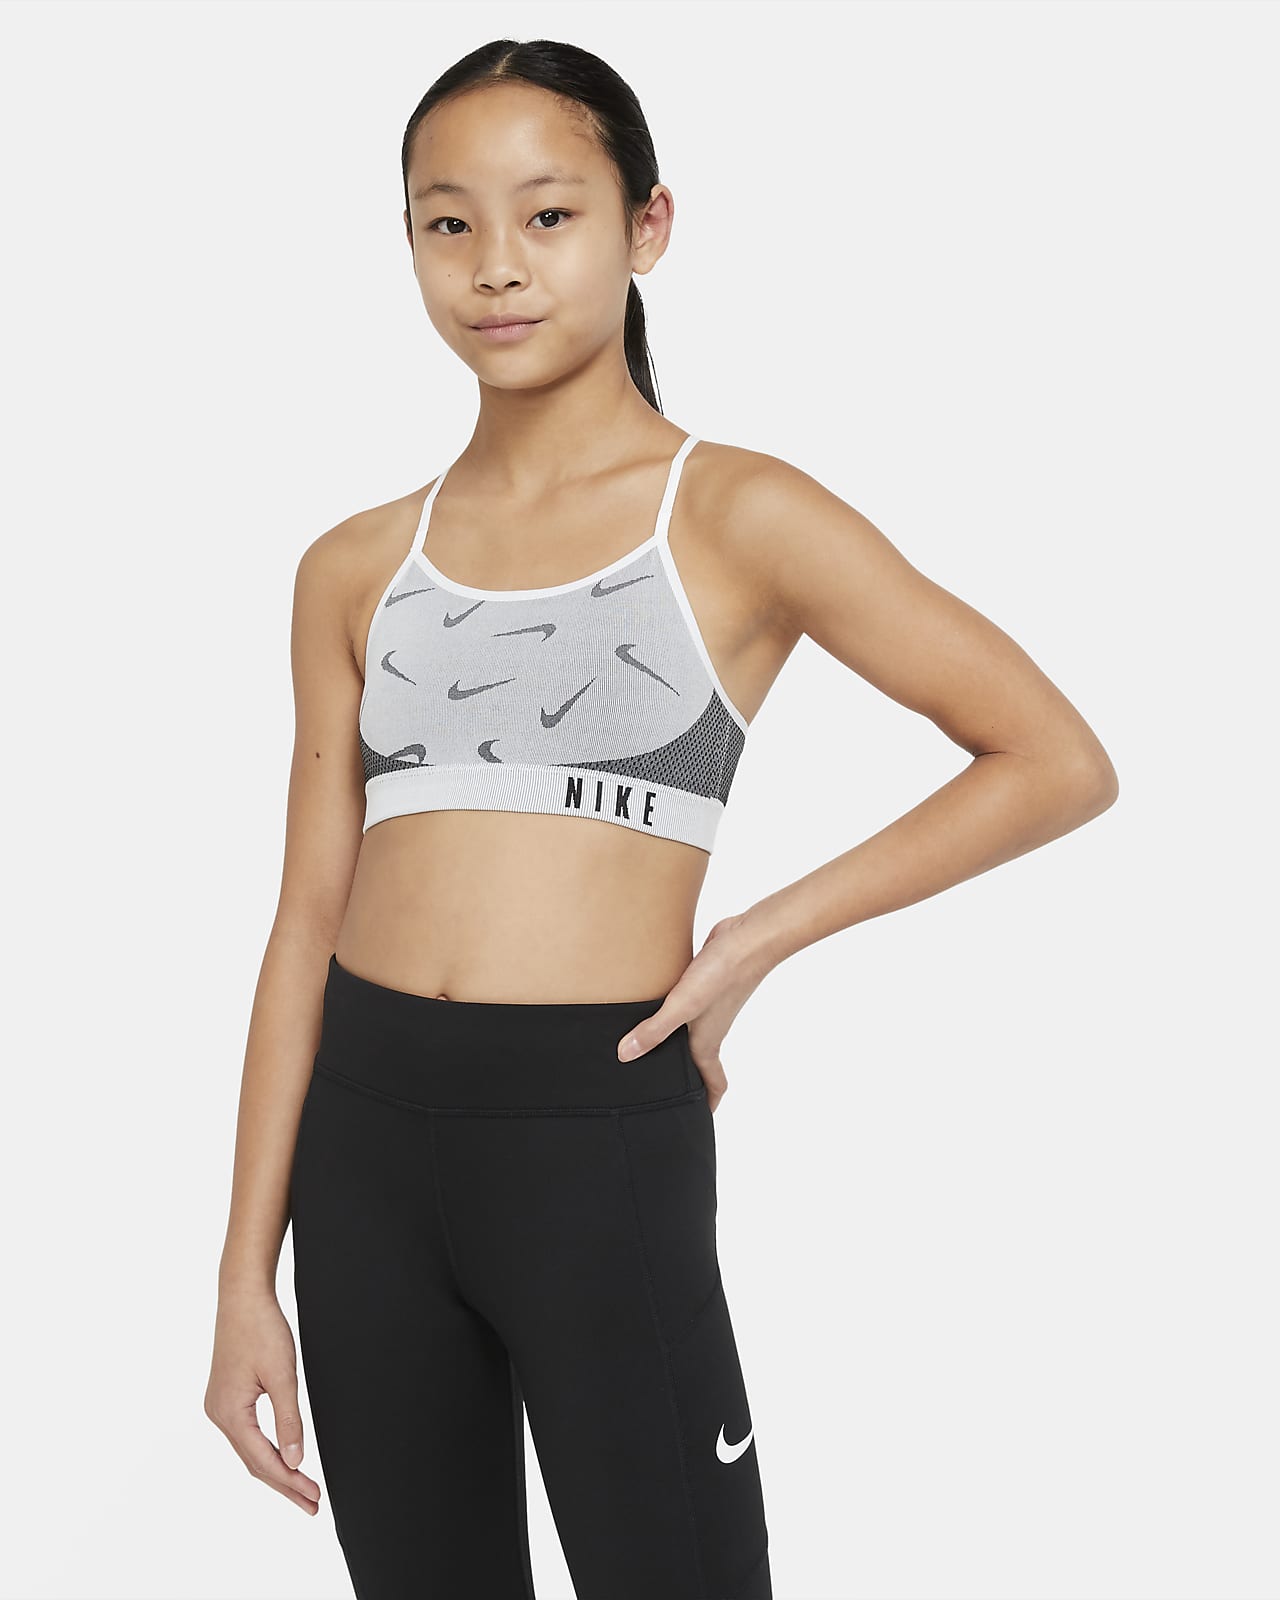 Nike Indy - Kaki - Top Deportivo Fitness, Sprinter